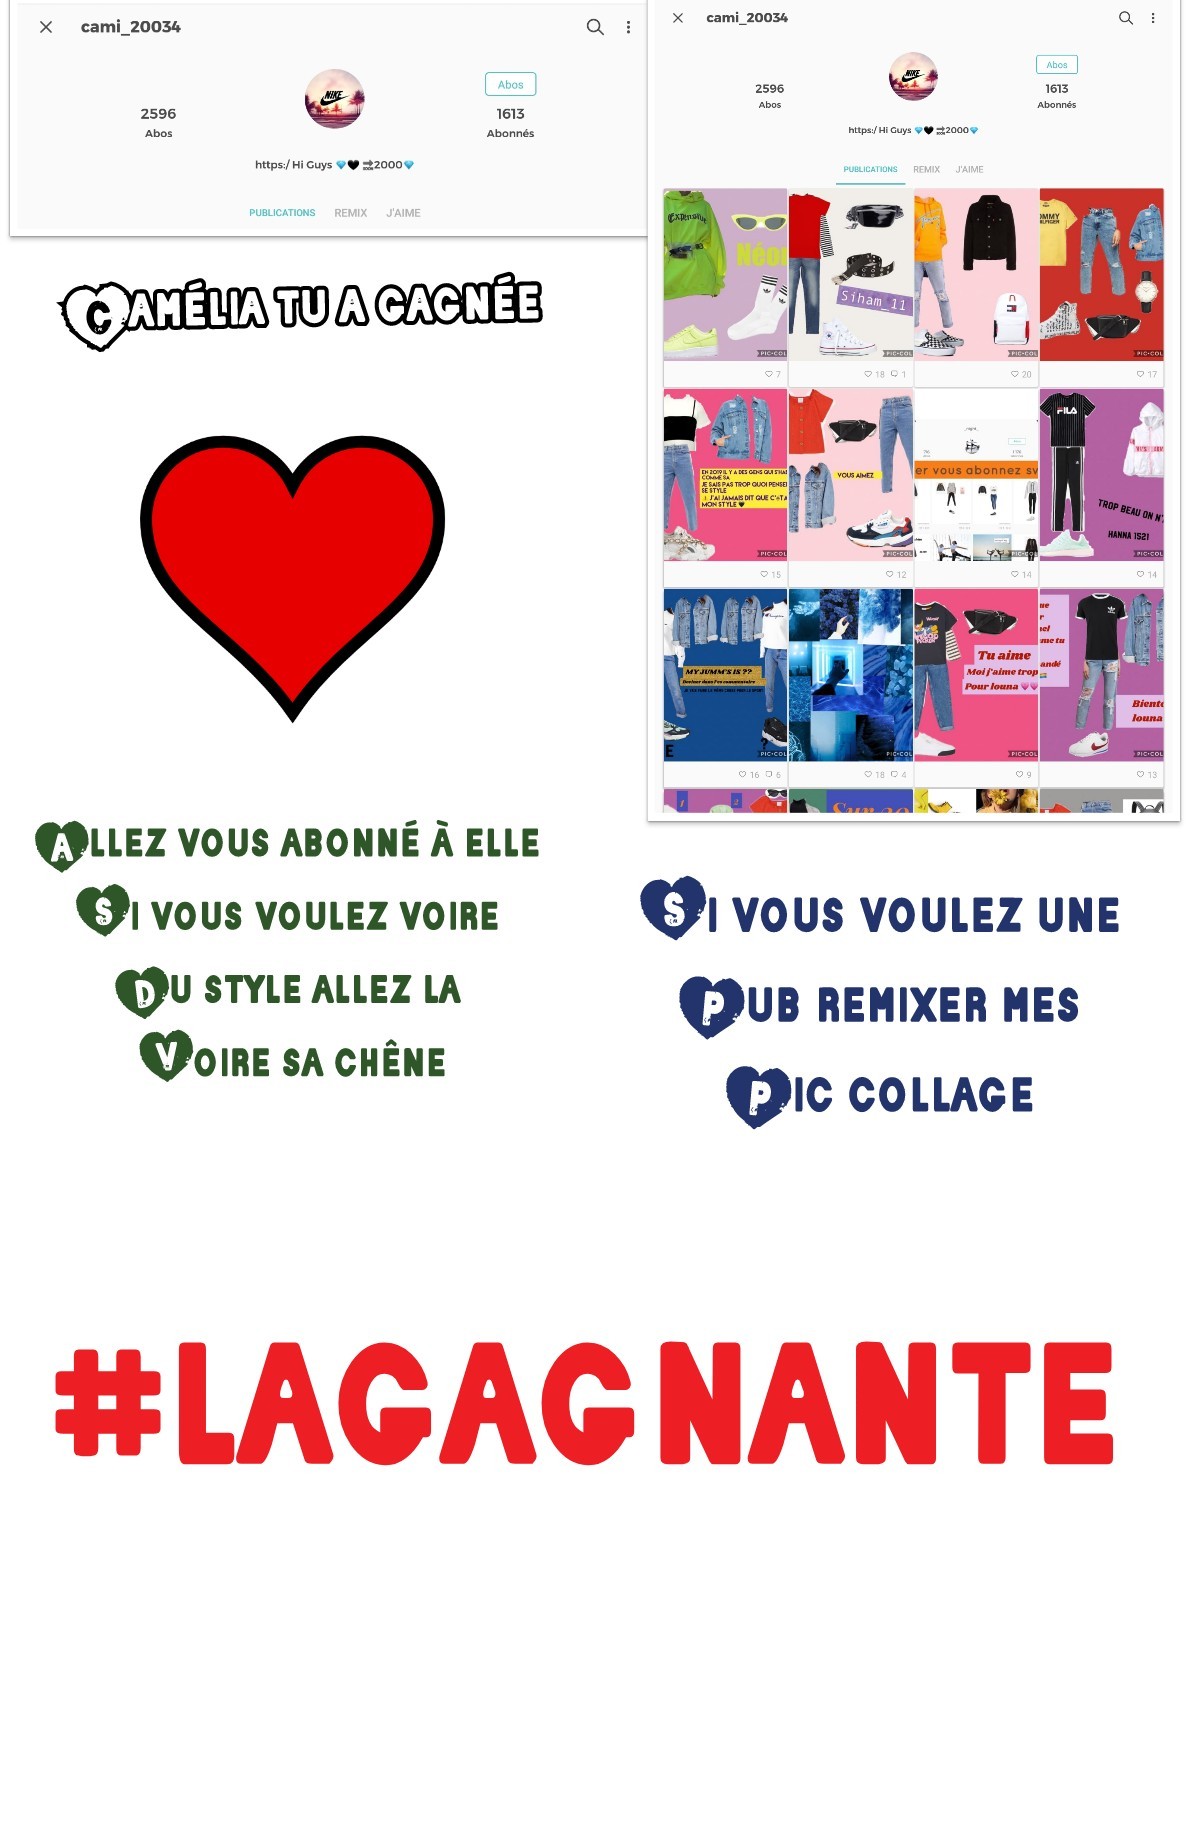 #lagagnante